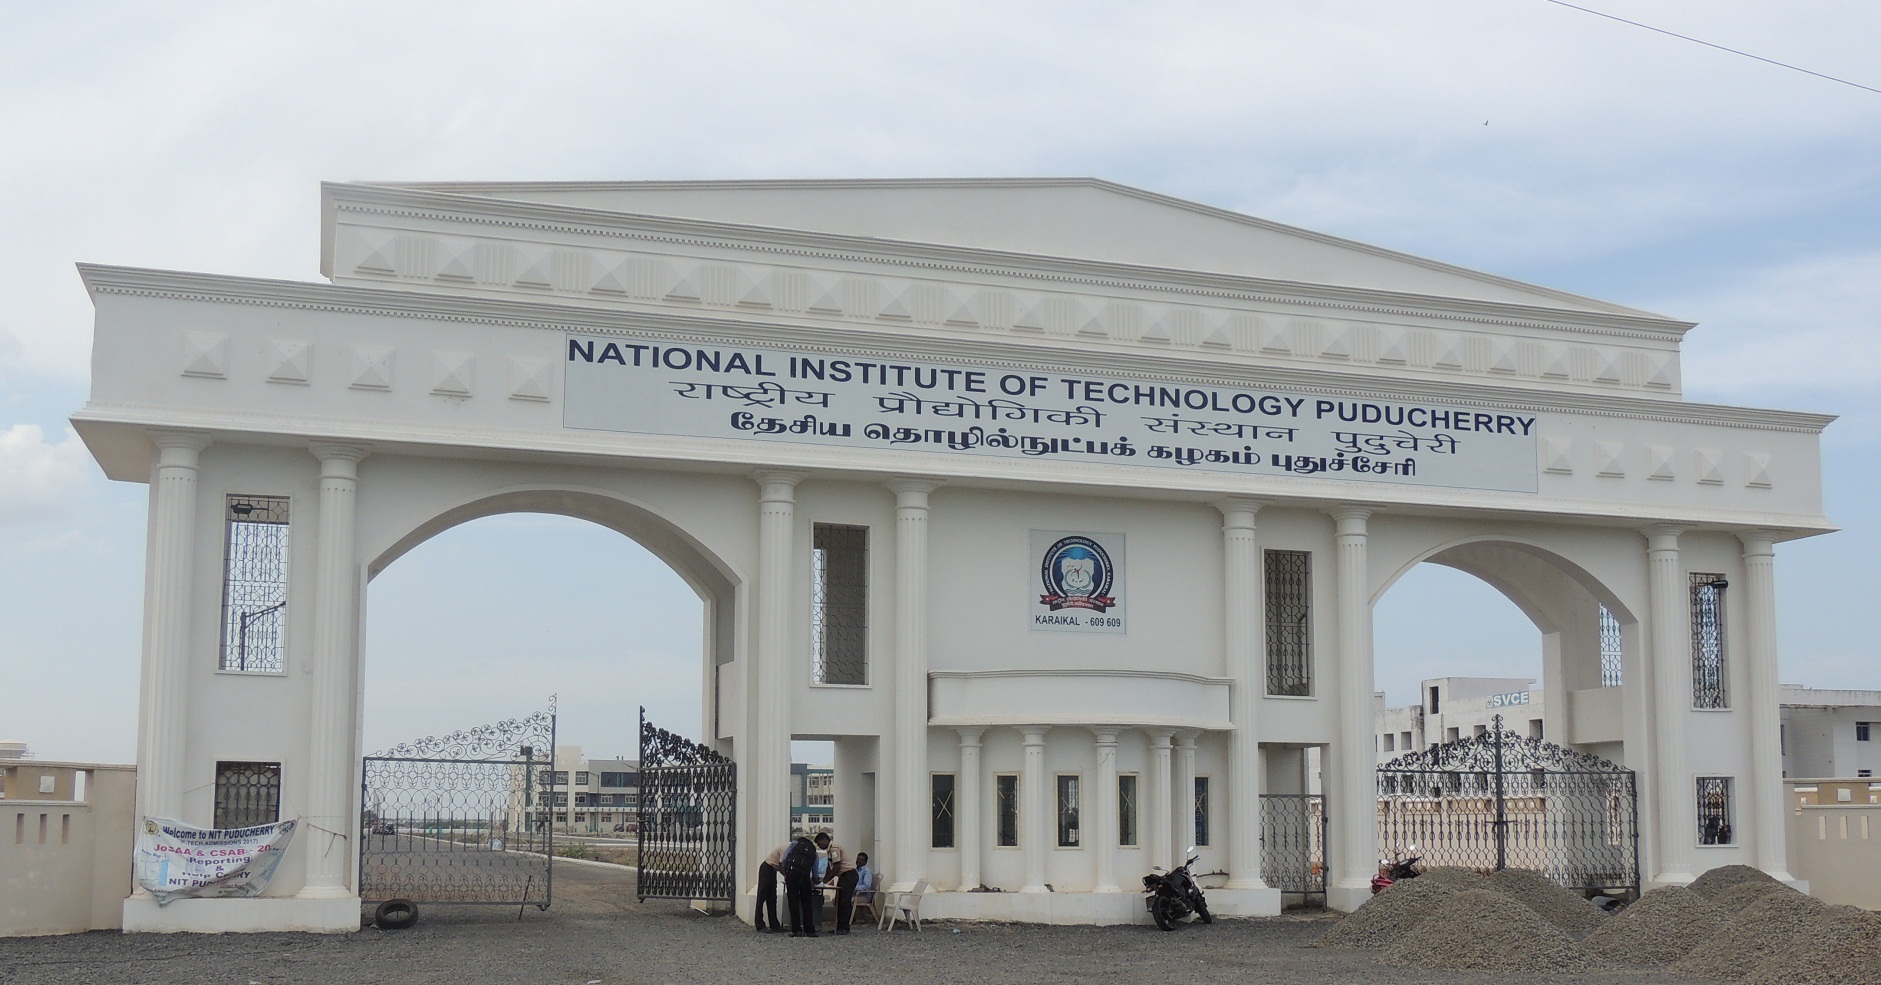 NIT (National Institute of Technology), Karaikal Image